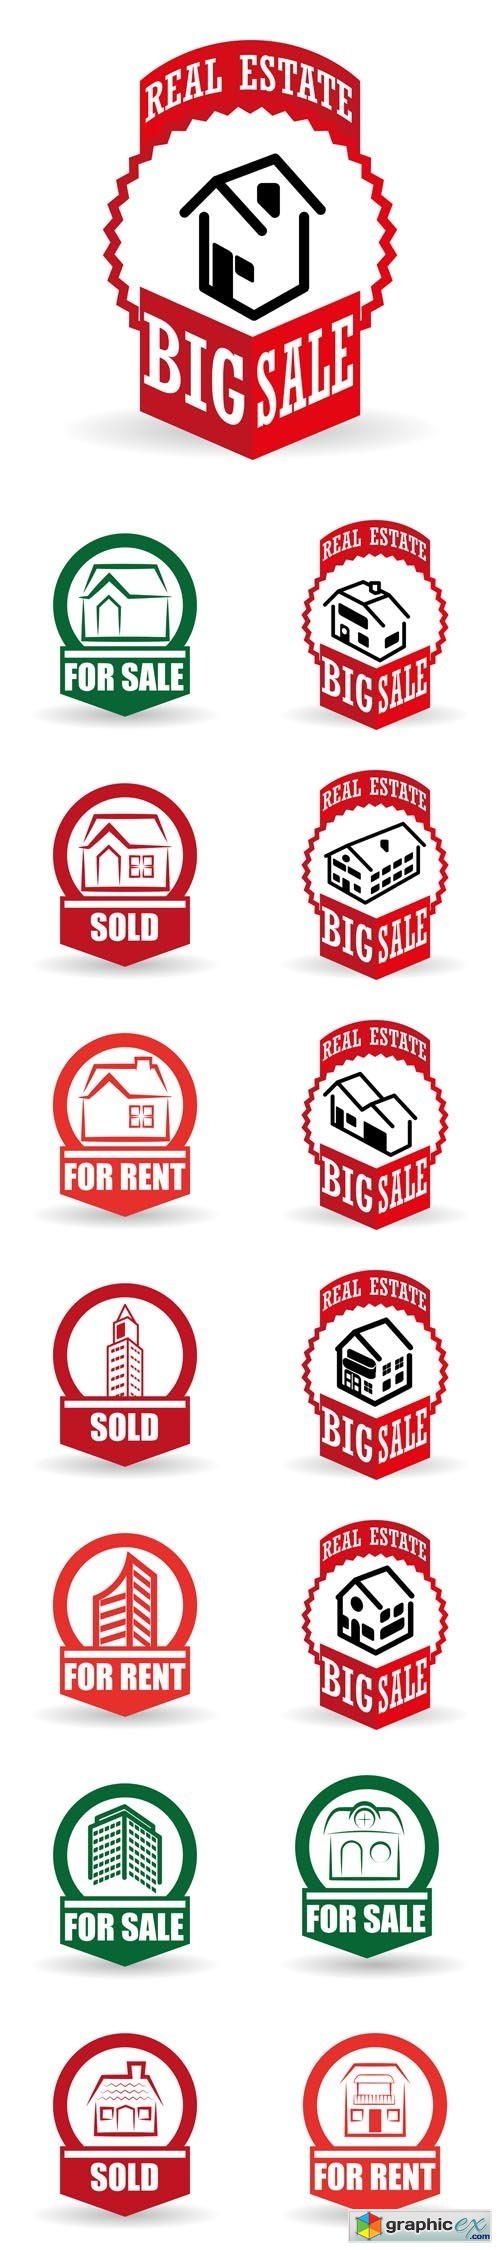 Real Estate Design Home Concept Icons